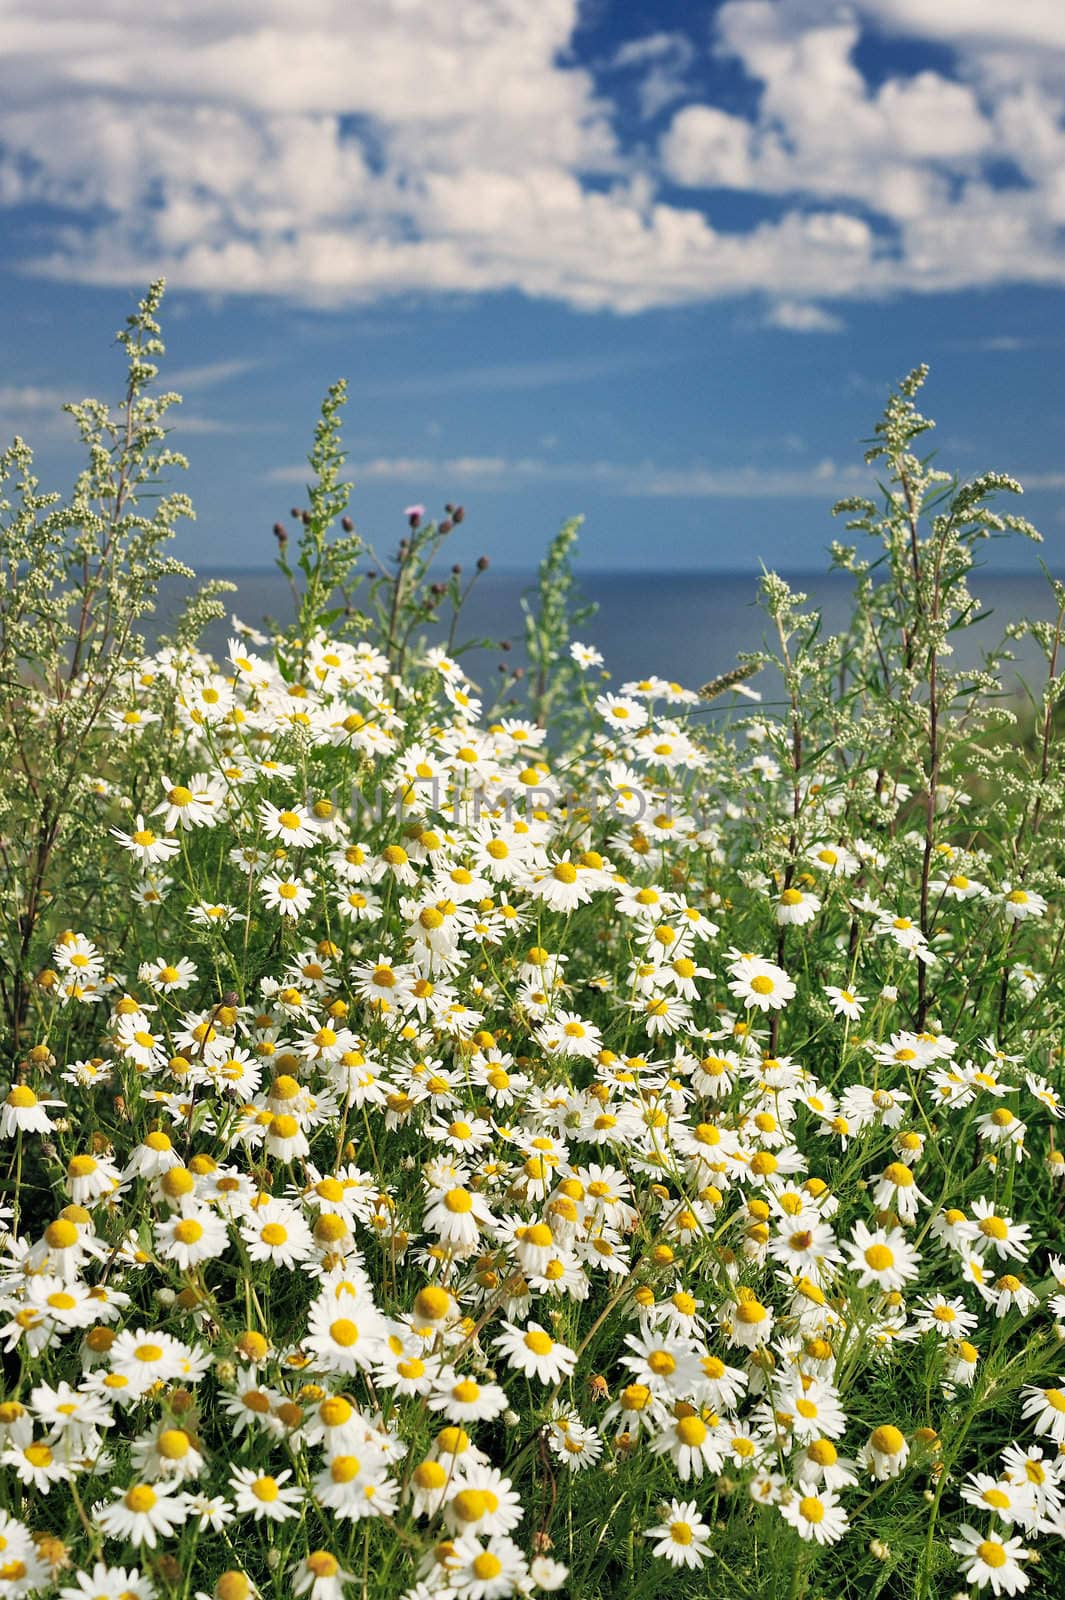 Flowers daisy near coastline in the sunny day